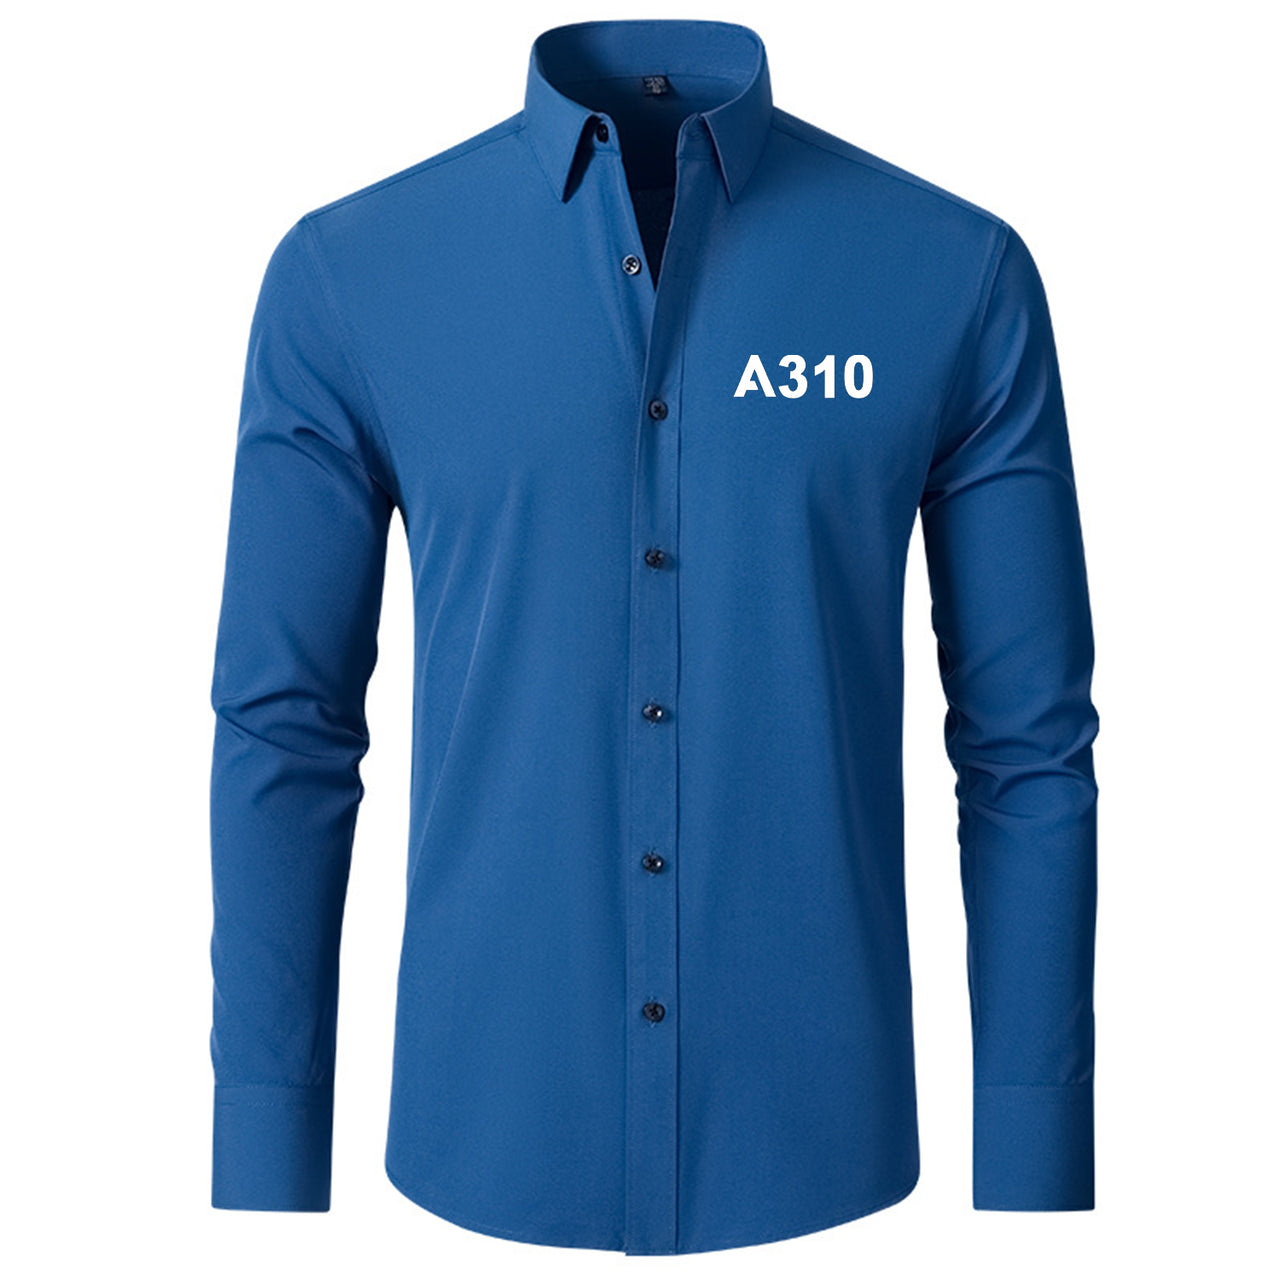 A310 Flat Text Designed Long Sleeve Shirts